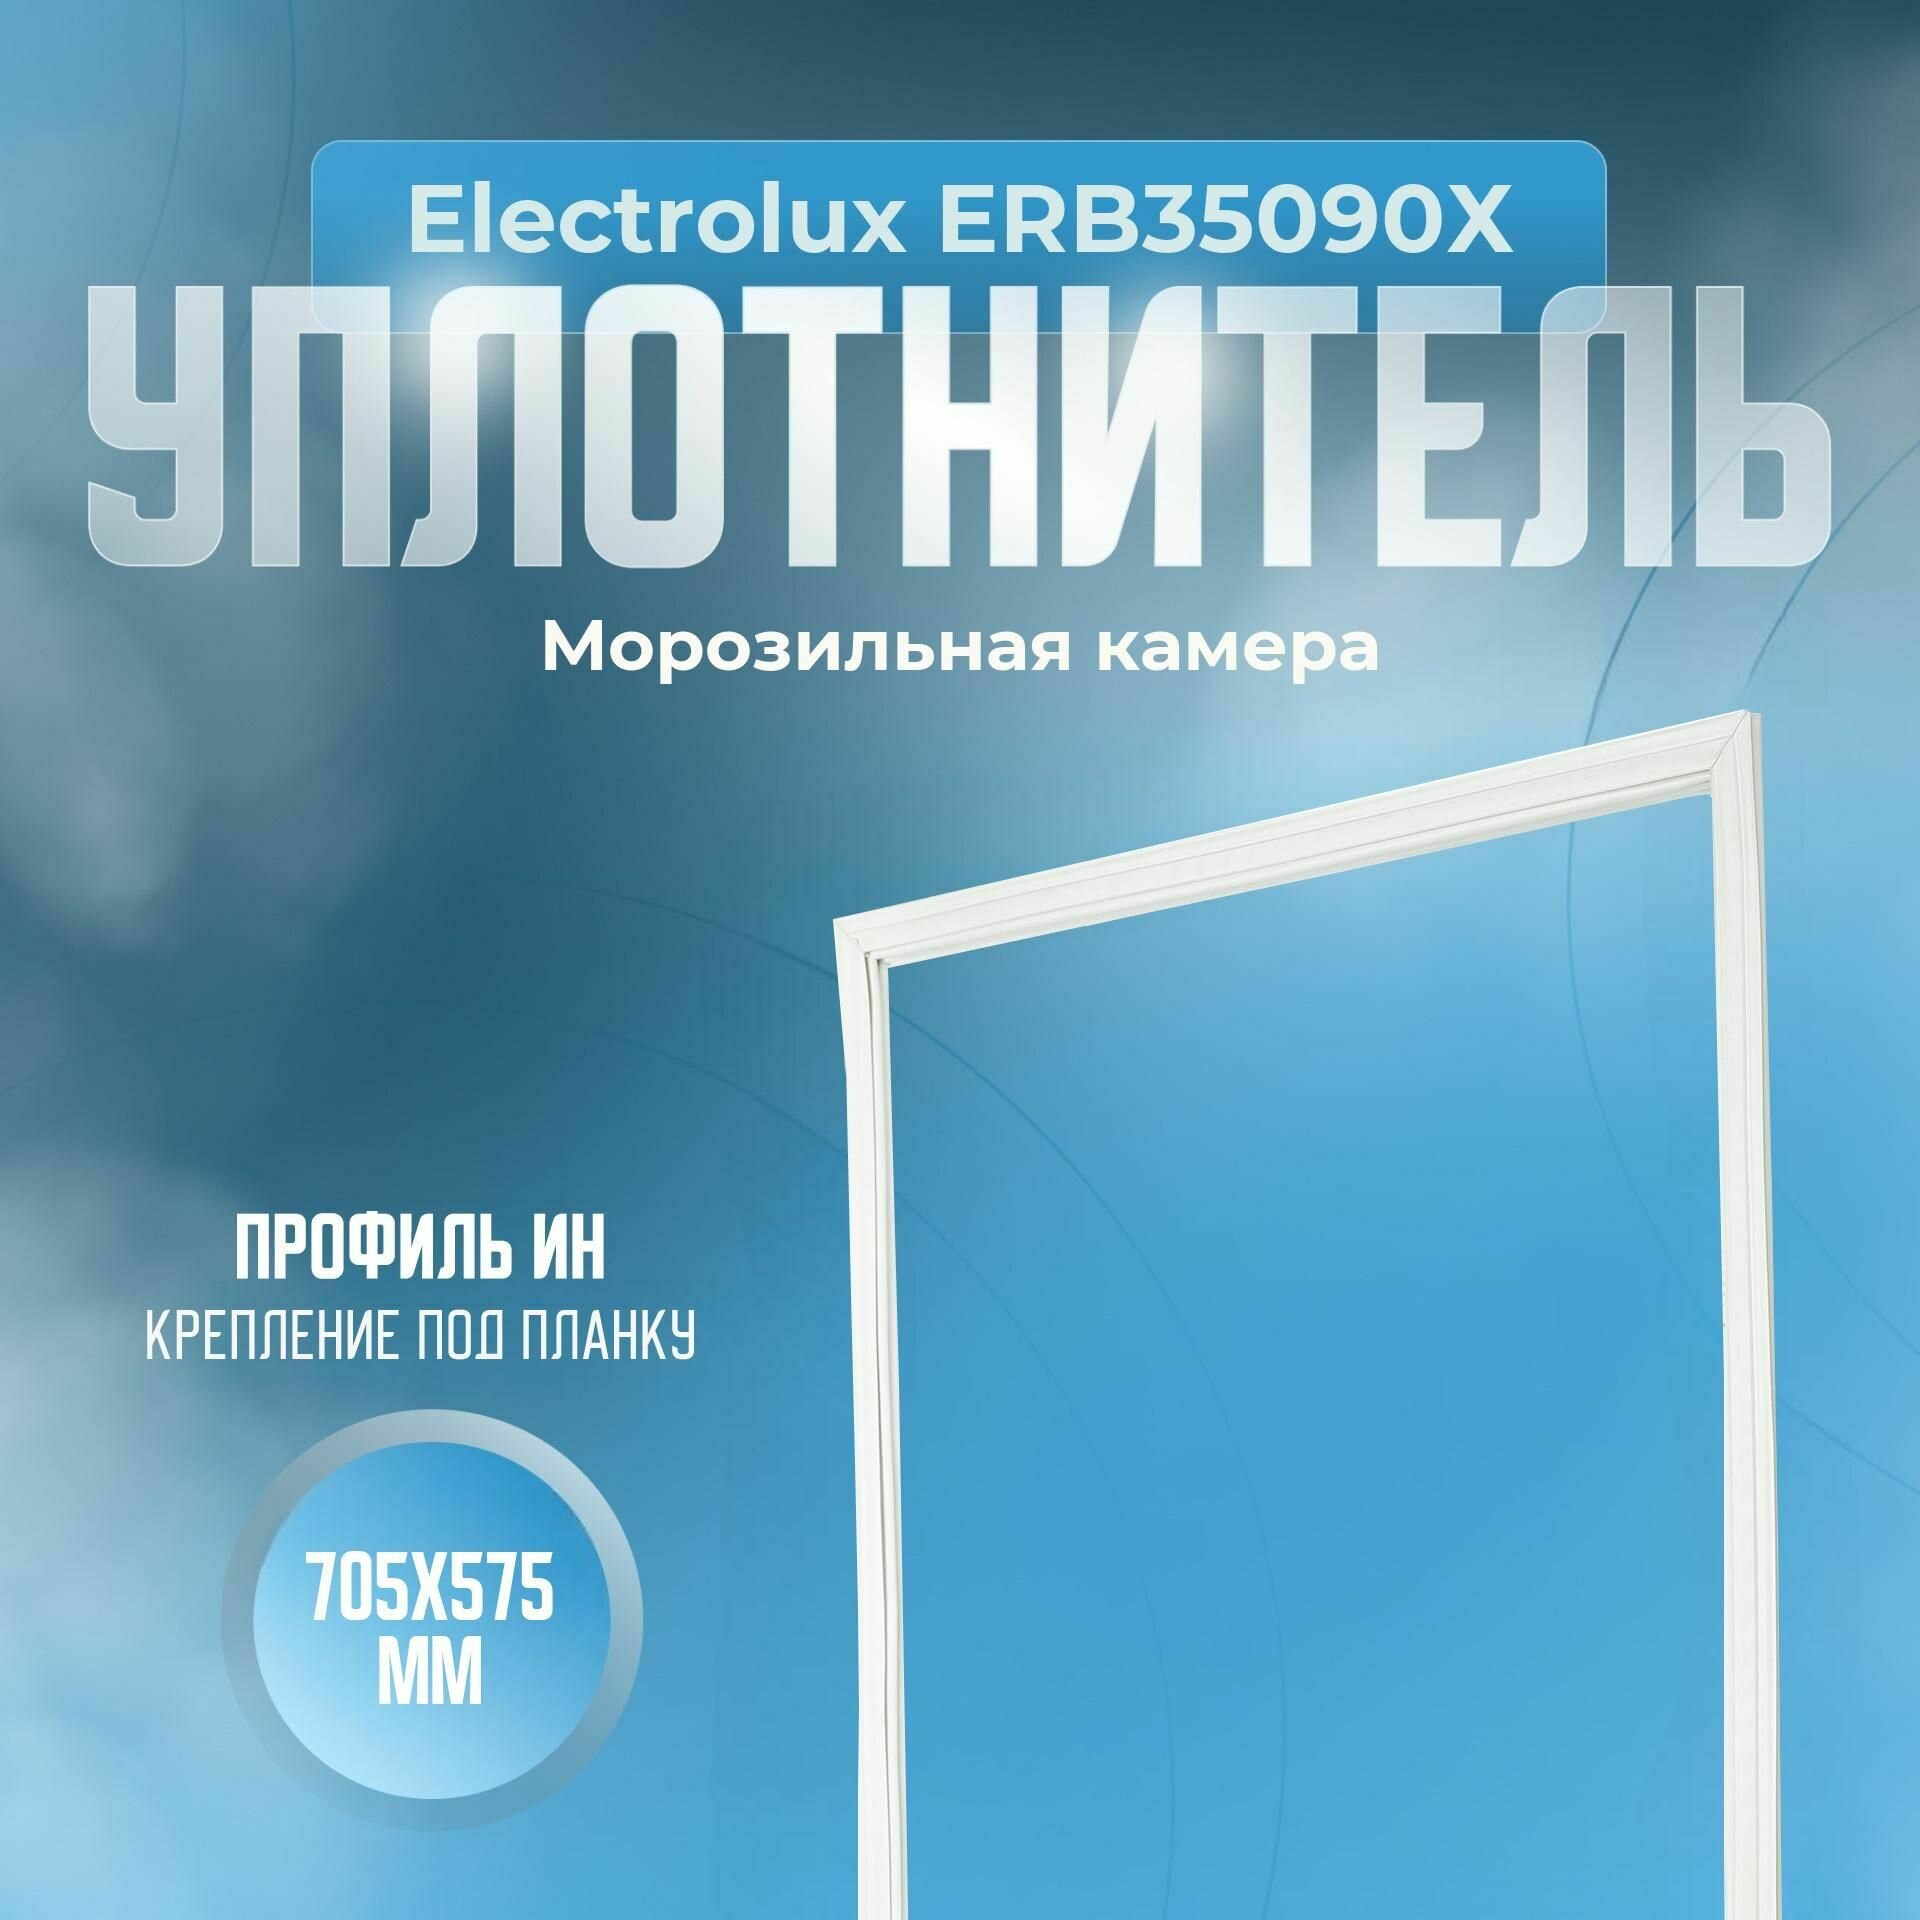 Уплотнитель Electrolux ERB35090Х. м. к, Размер - 705х575 мм. ИН